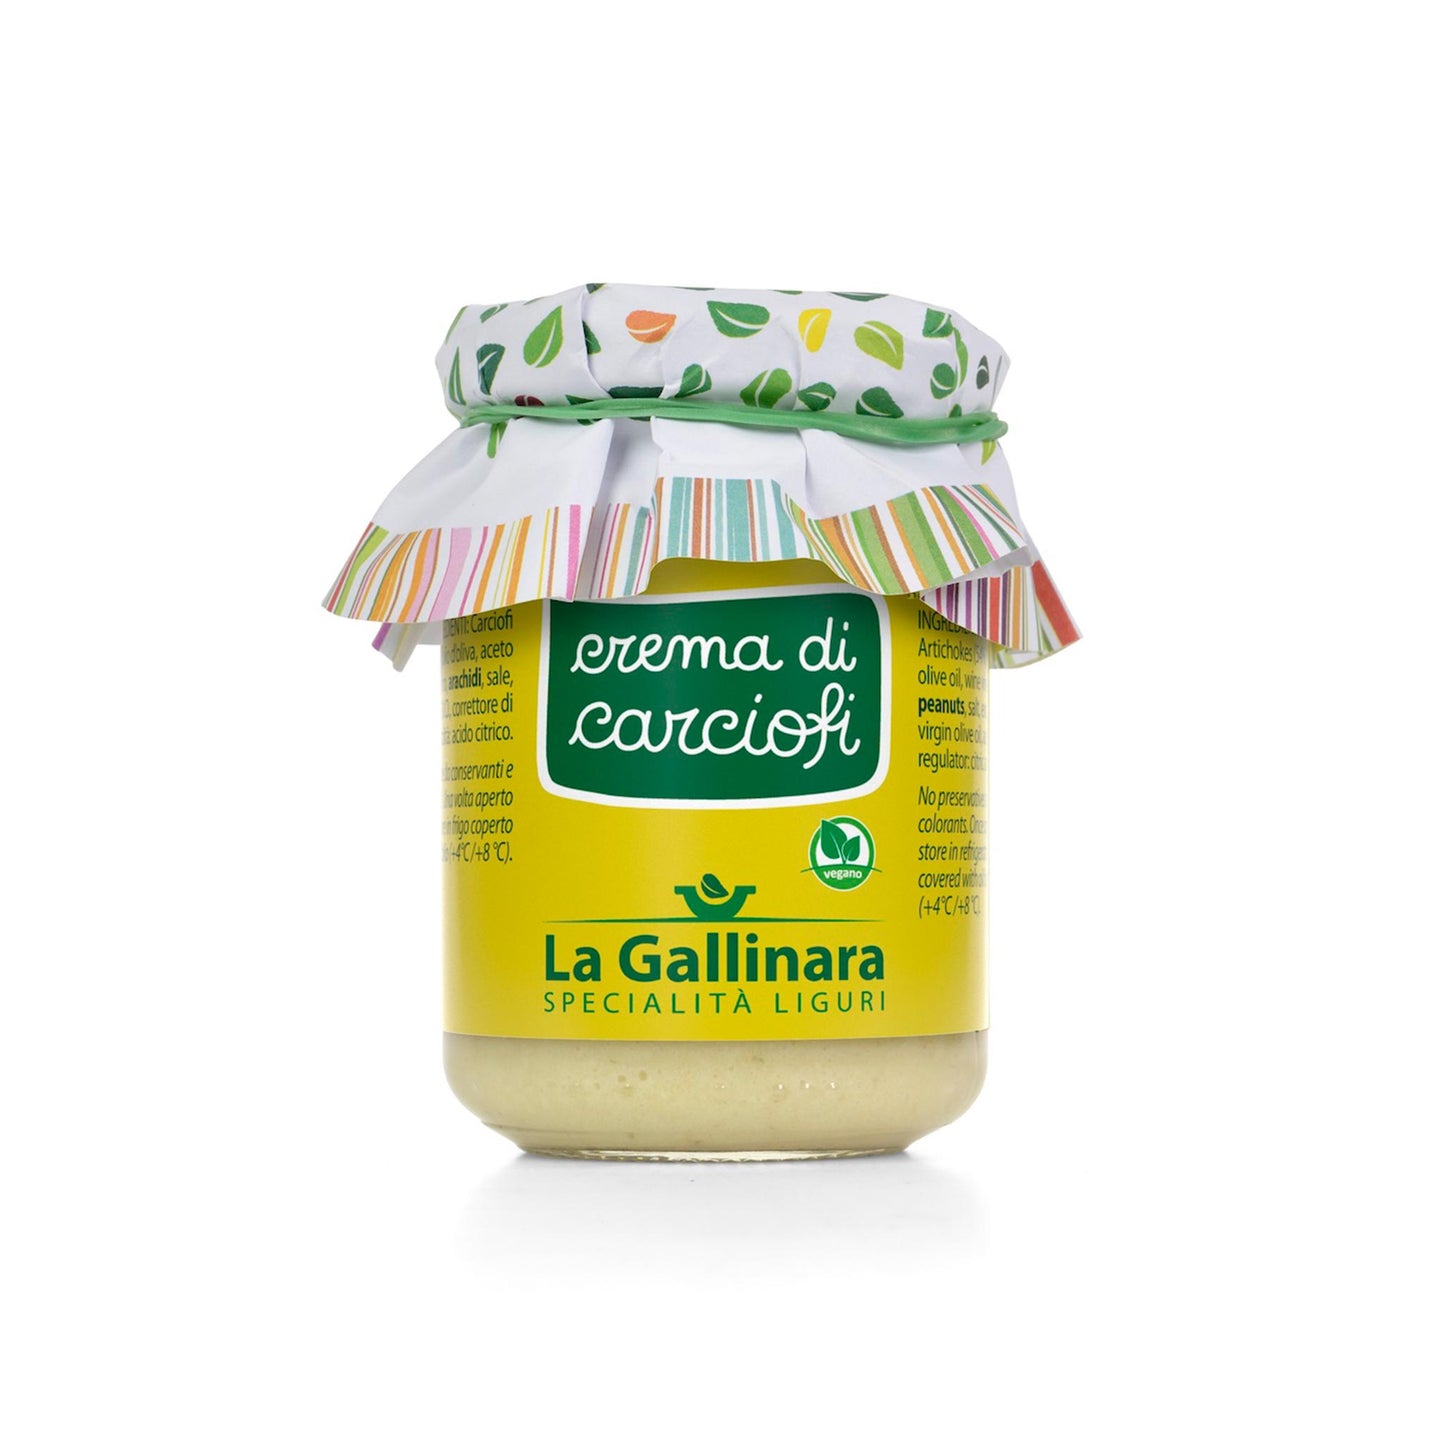 La Gallinara Crema di Carciofi - Artichoke Cream 130g - Frankies Pantry and Cellar